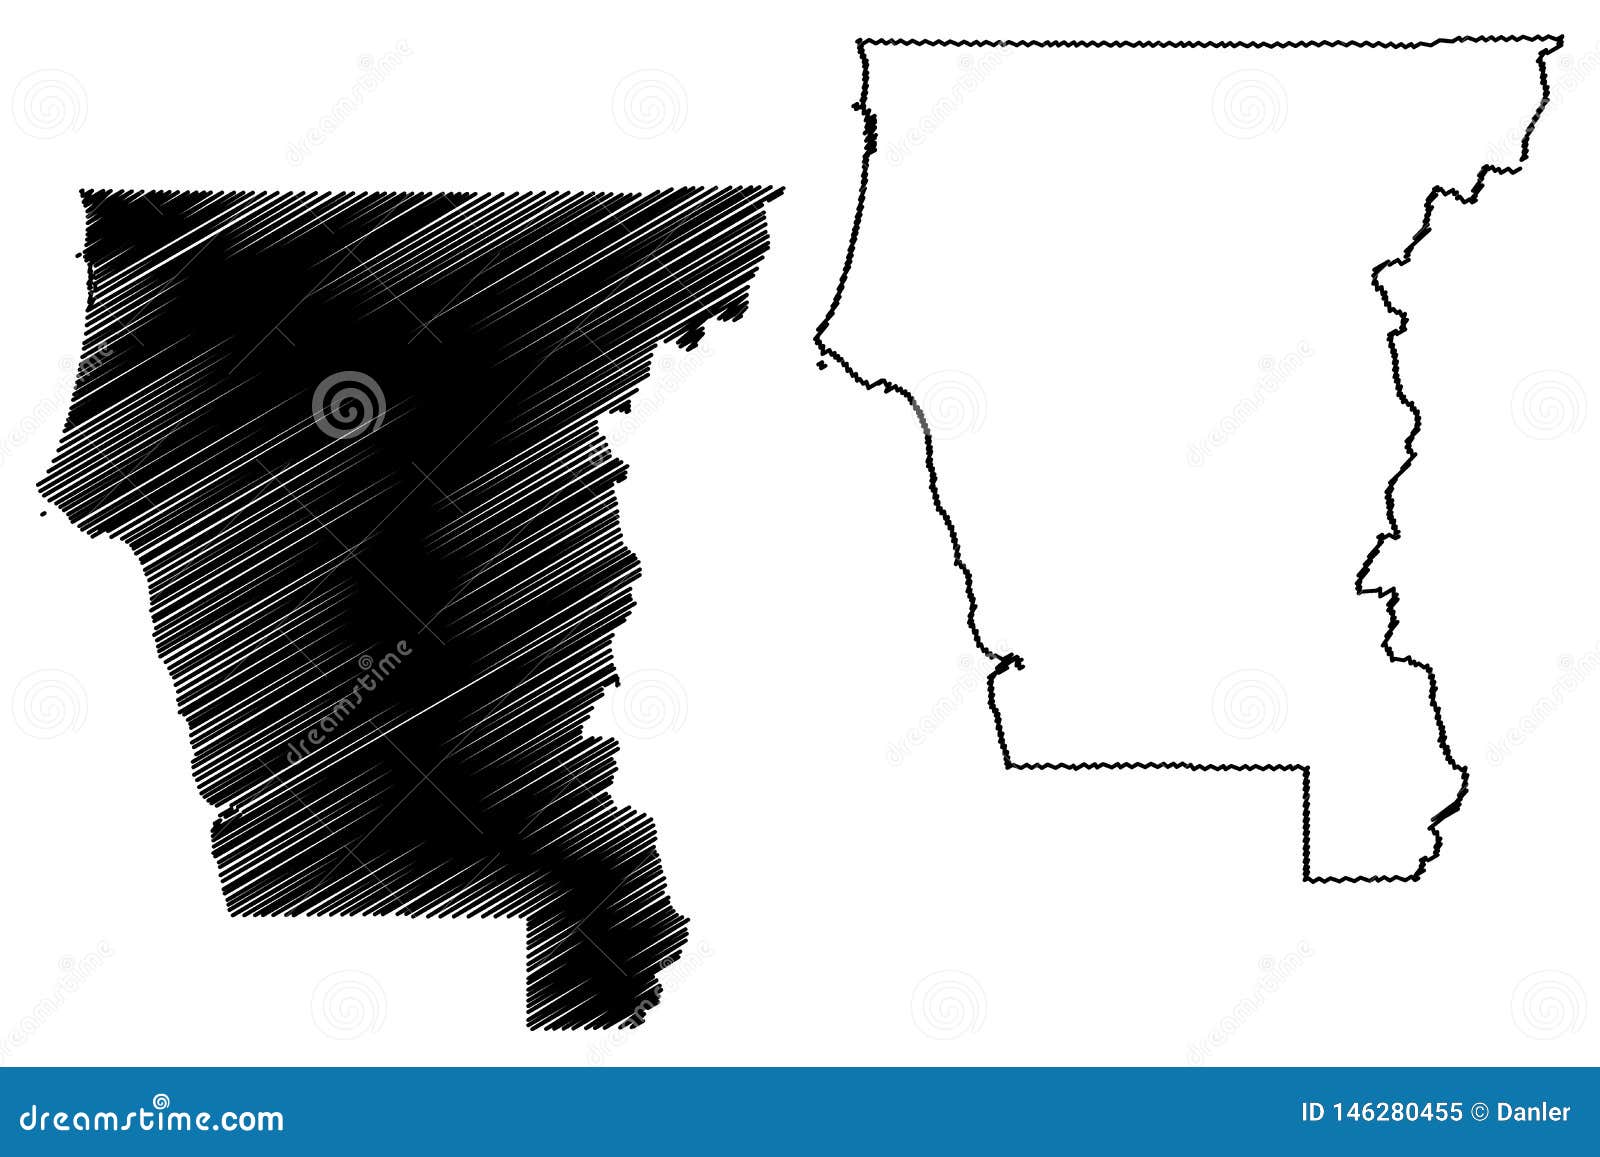 del norte county, california map 